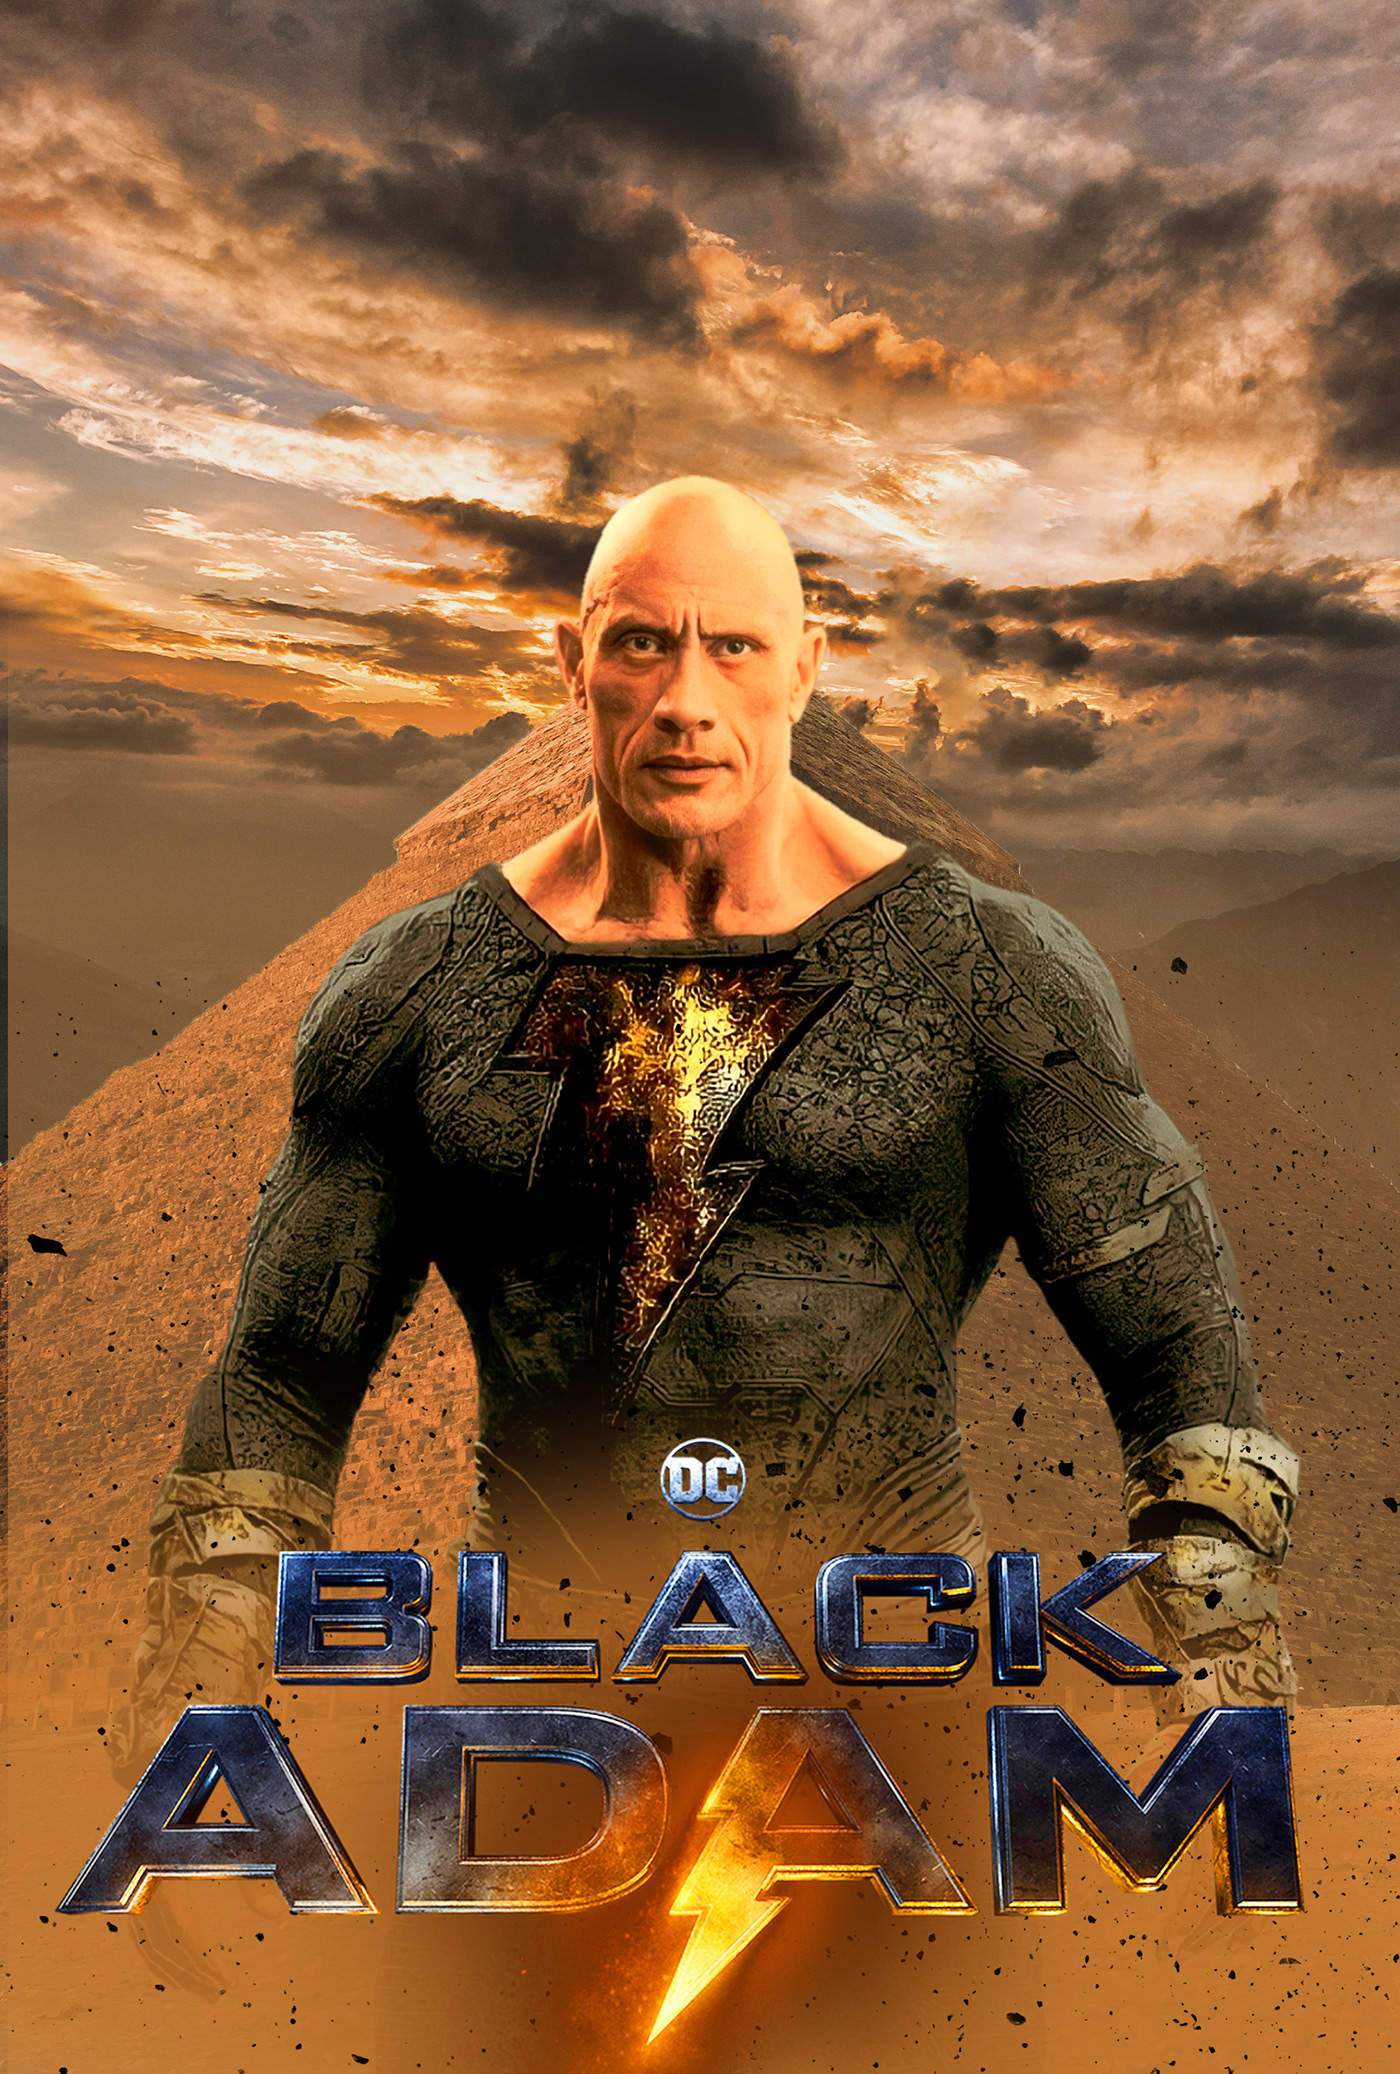 movie movie poster Cinema design Advertising  Poster Design movie poster design Adam black adam black adam poster